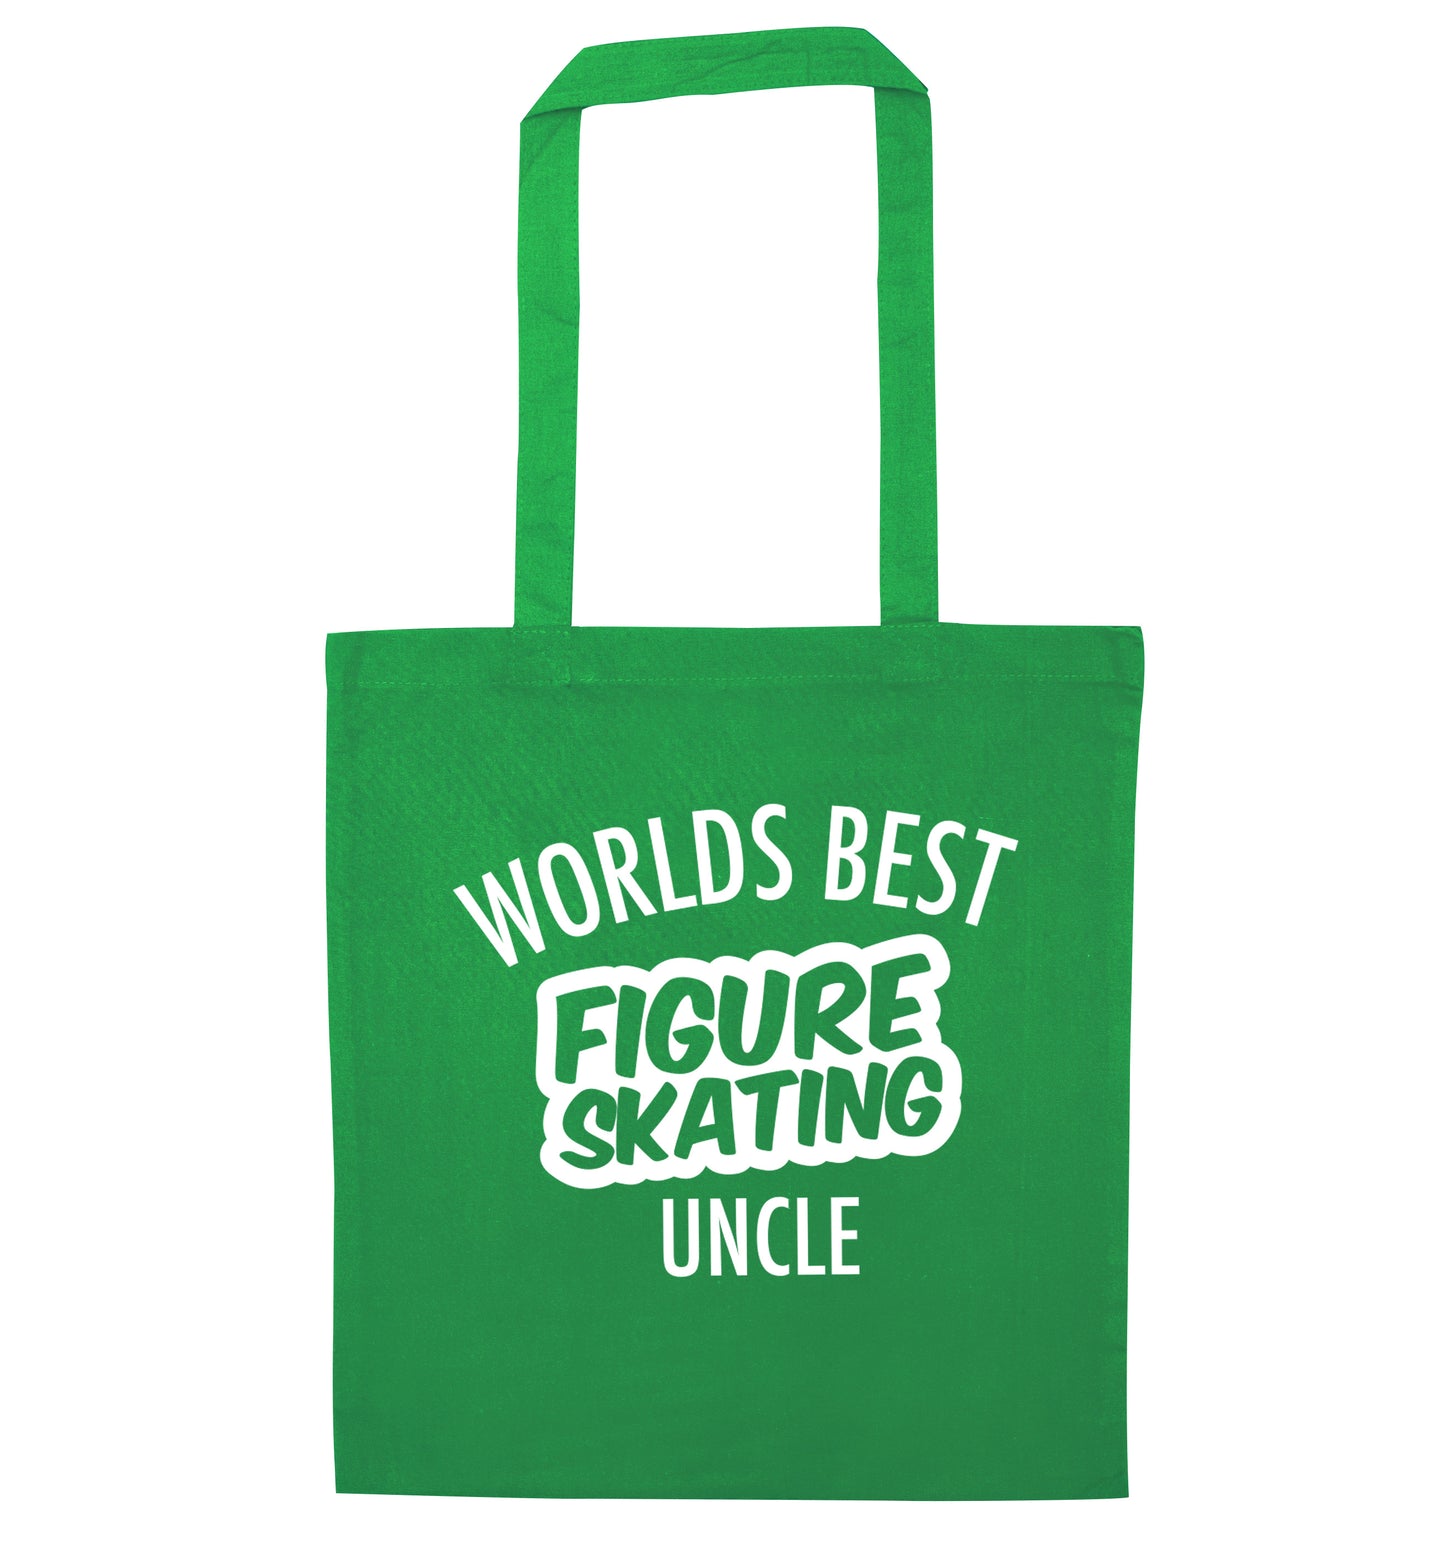 Worlds best figure skating uncle green tote bag